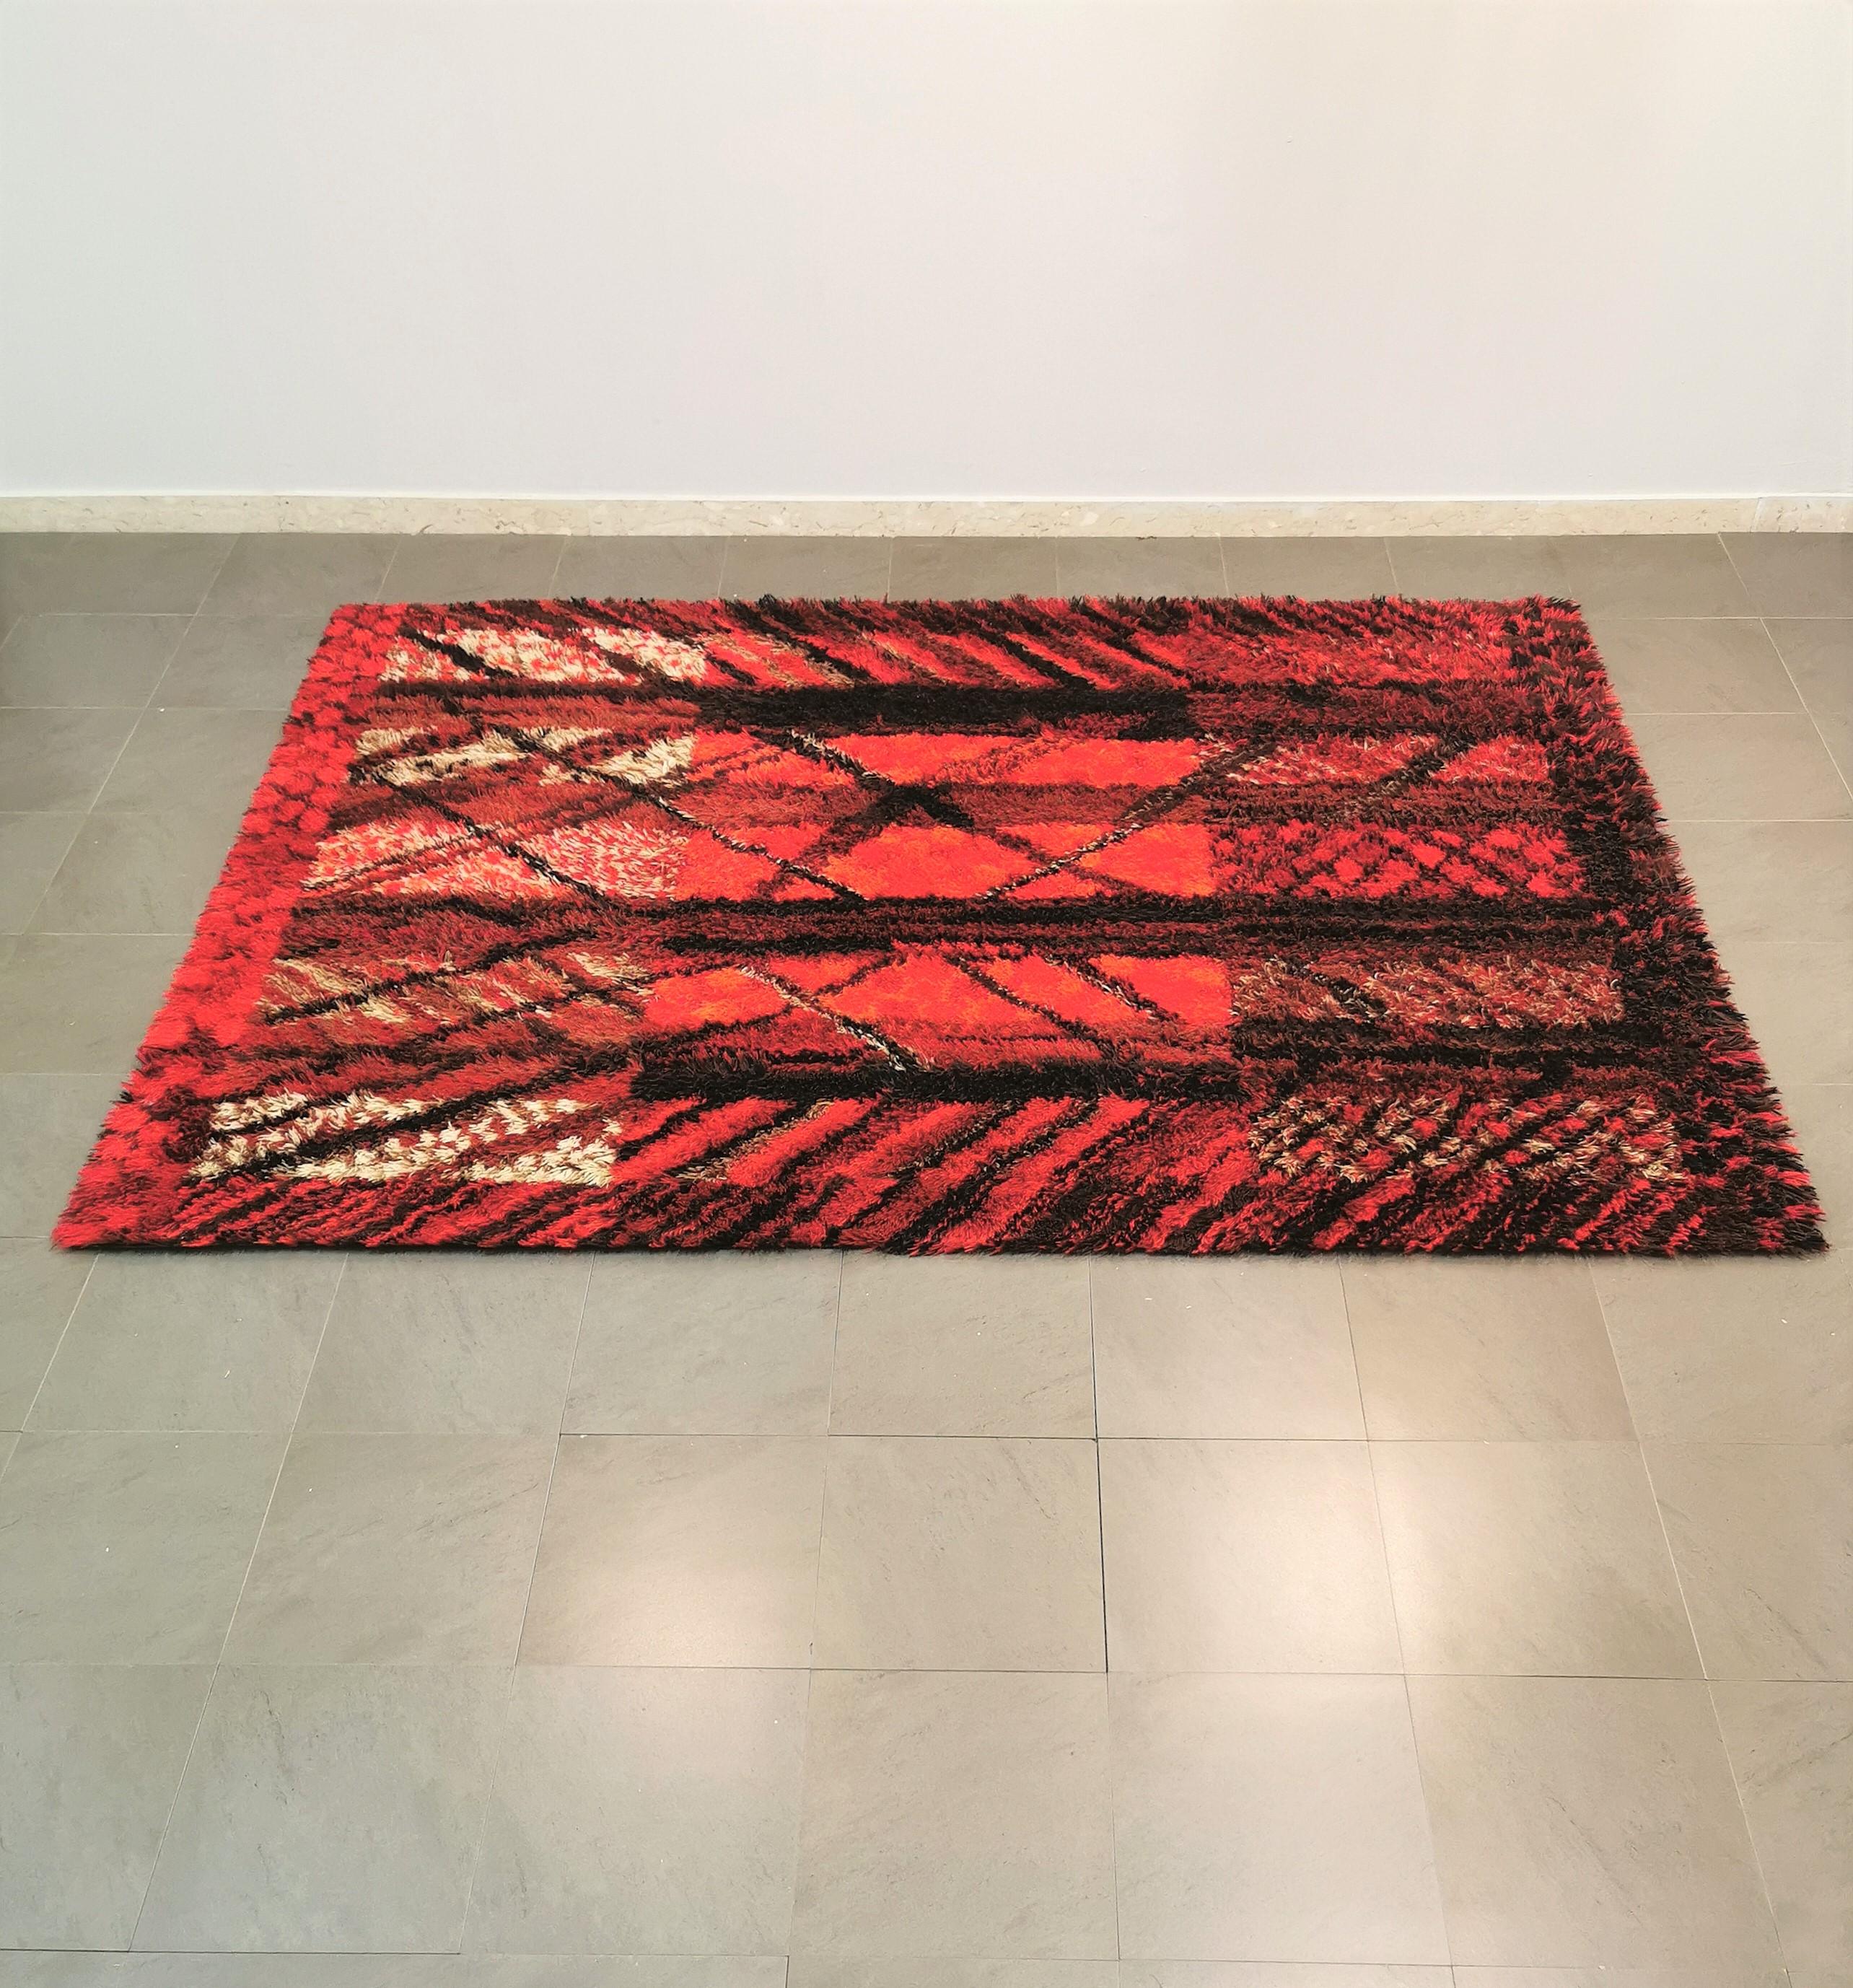 Midcentury Wool Red Black Large Carpet Rya Rug by Marianne Richter Sweden 1960s For Sale 2